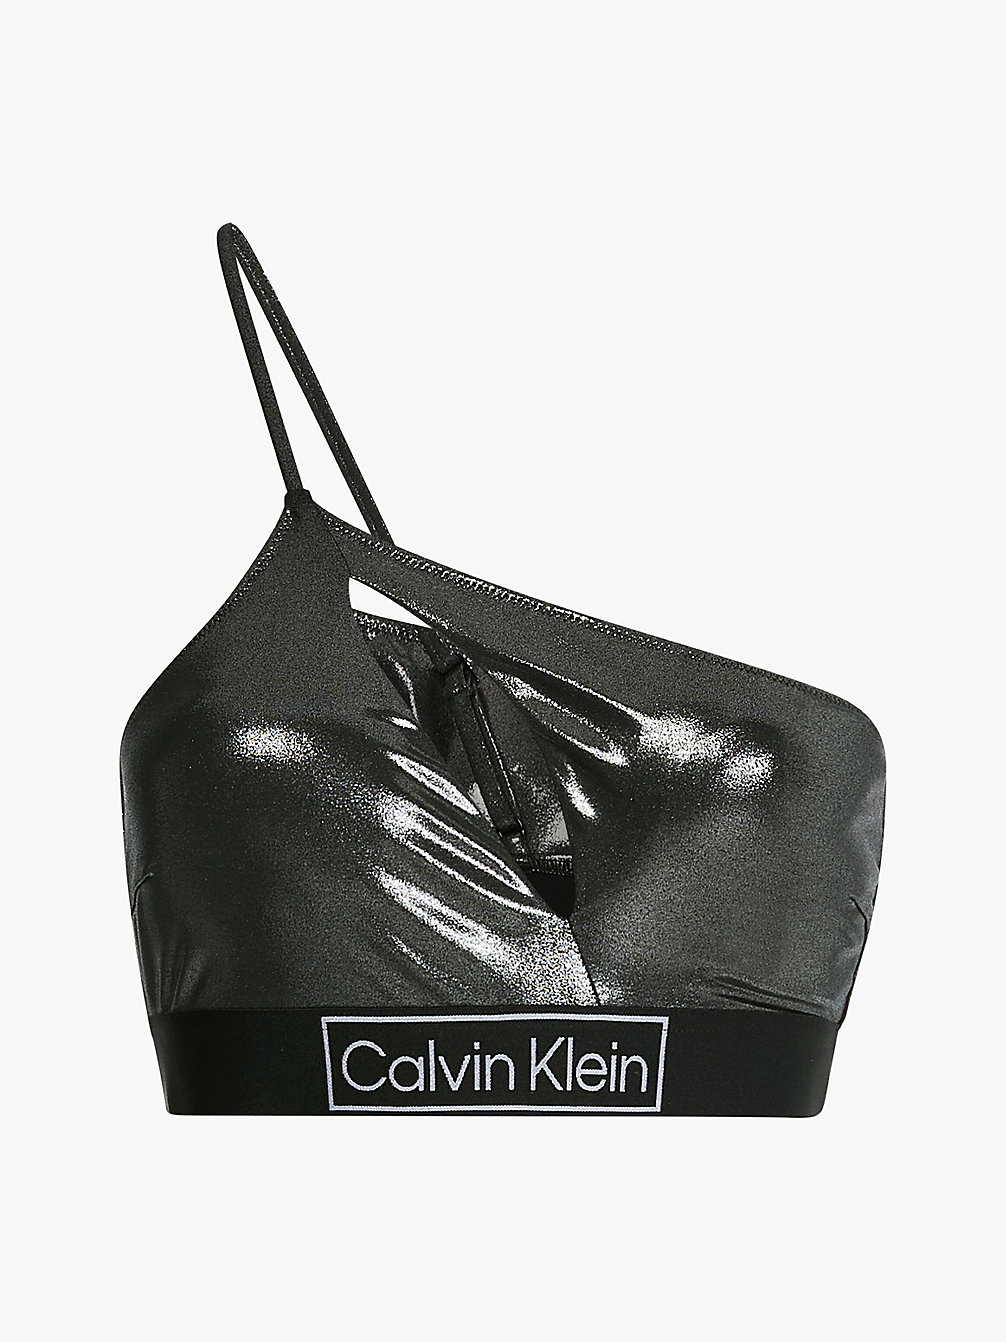 PVH BLACK > Верх бикини с одной бретелью - Core Festive > undefined Женщины - Calvin Klein